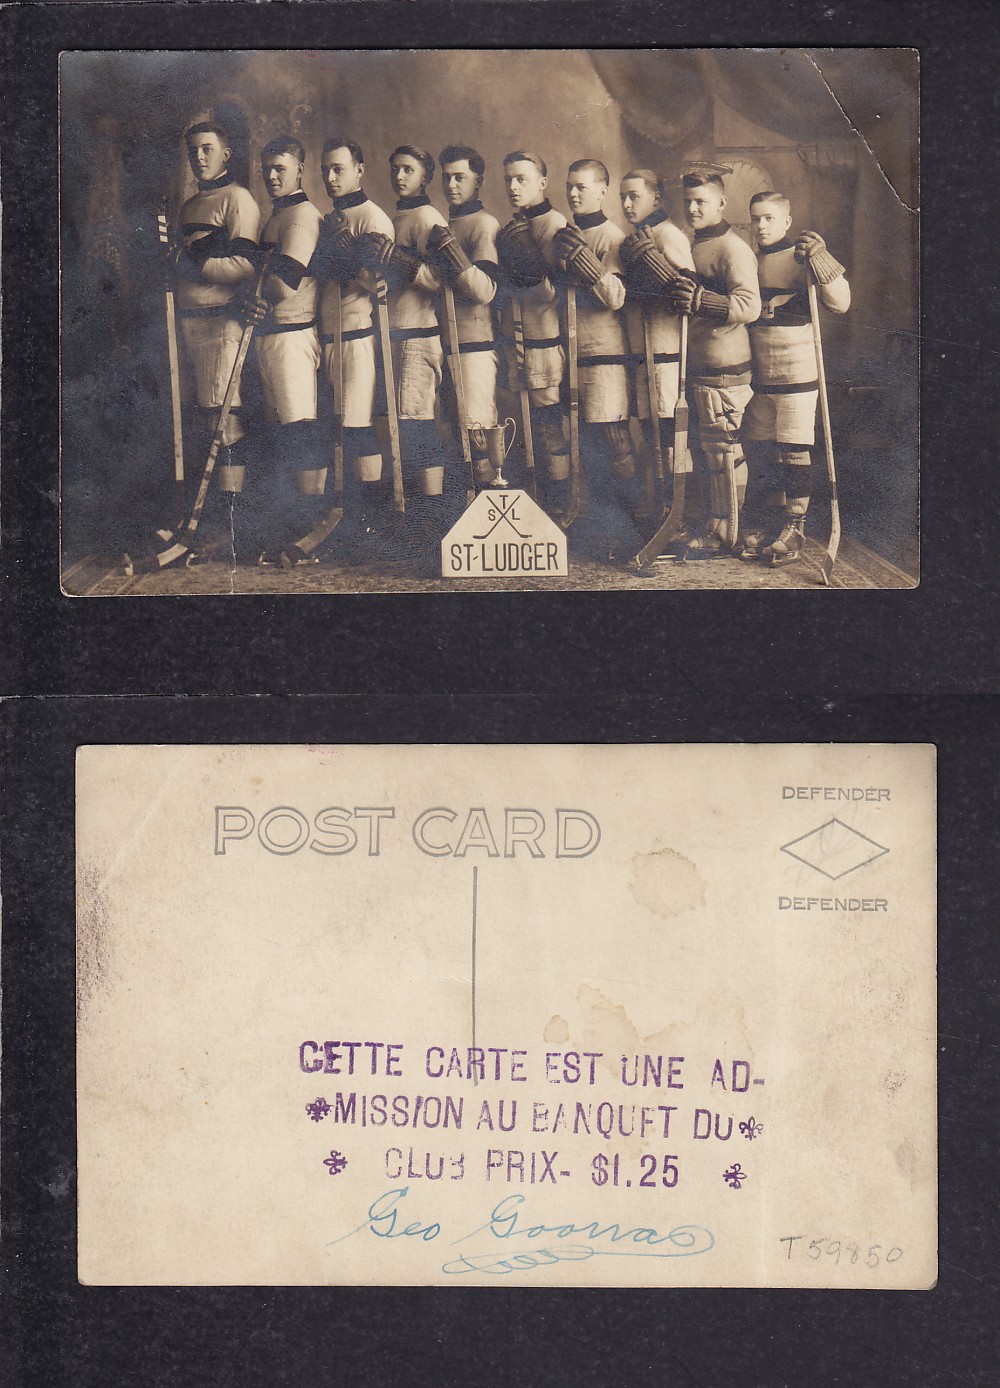 1900'S ST-LUDGER HOCKEY TEAM POST CARD photo